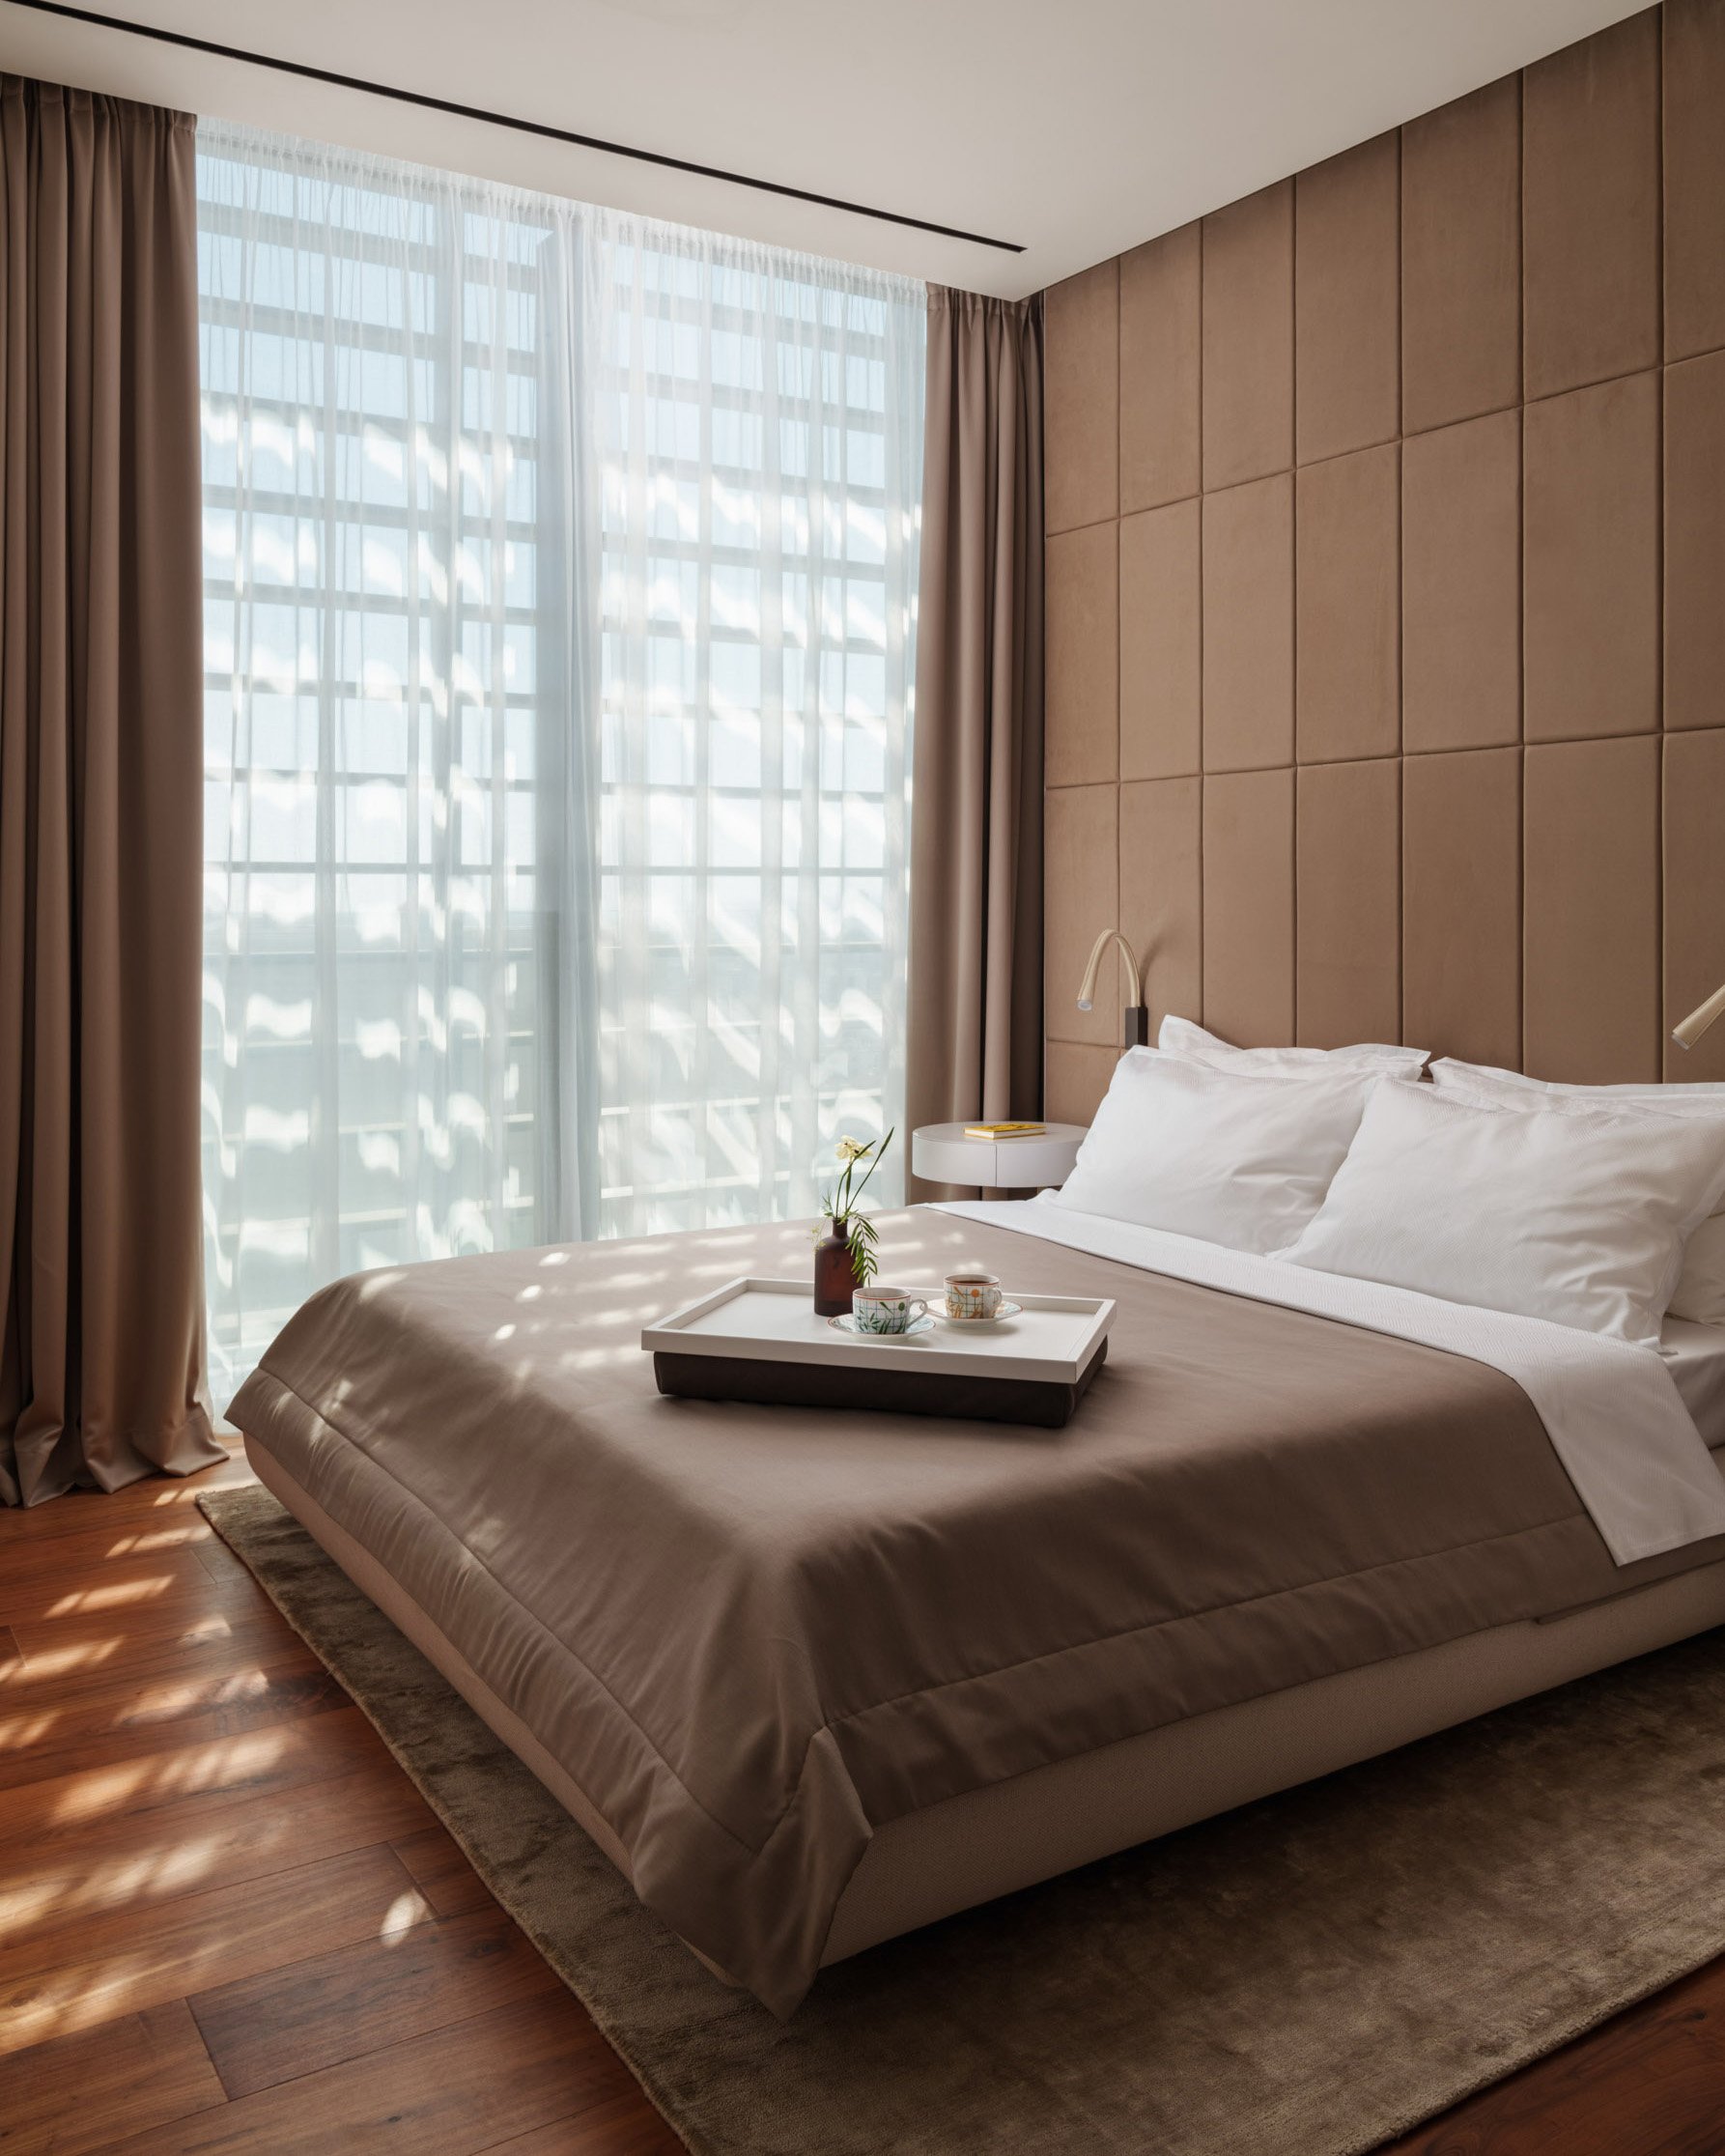 modern-seaside-interior-design-bedroom-hotel-feel copy.jpg